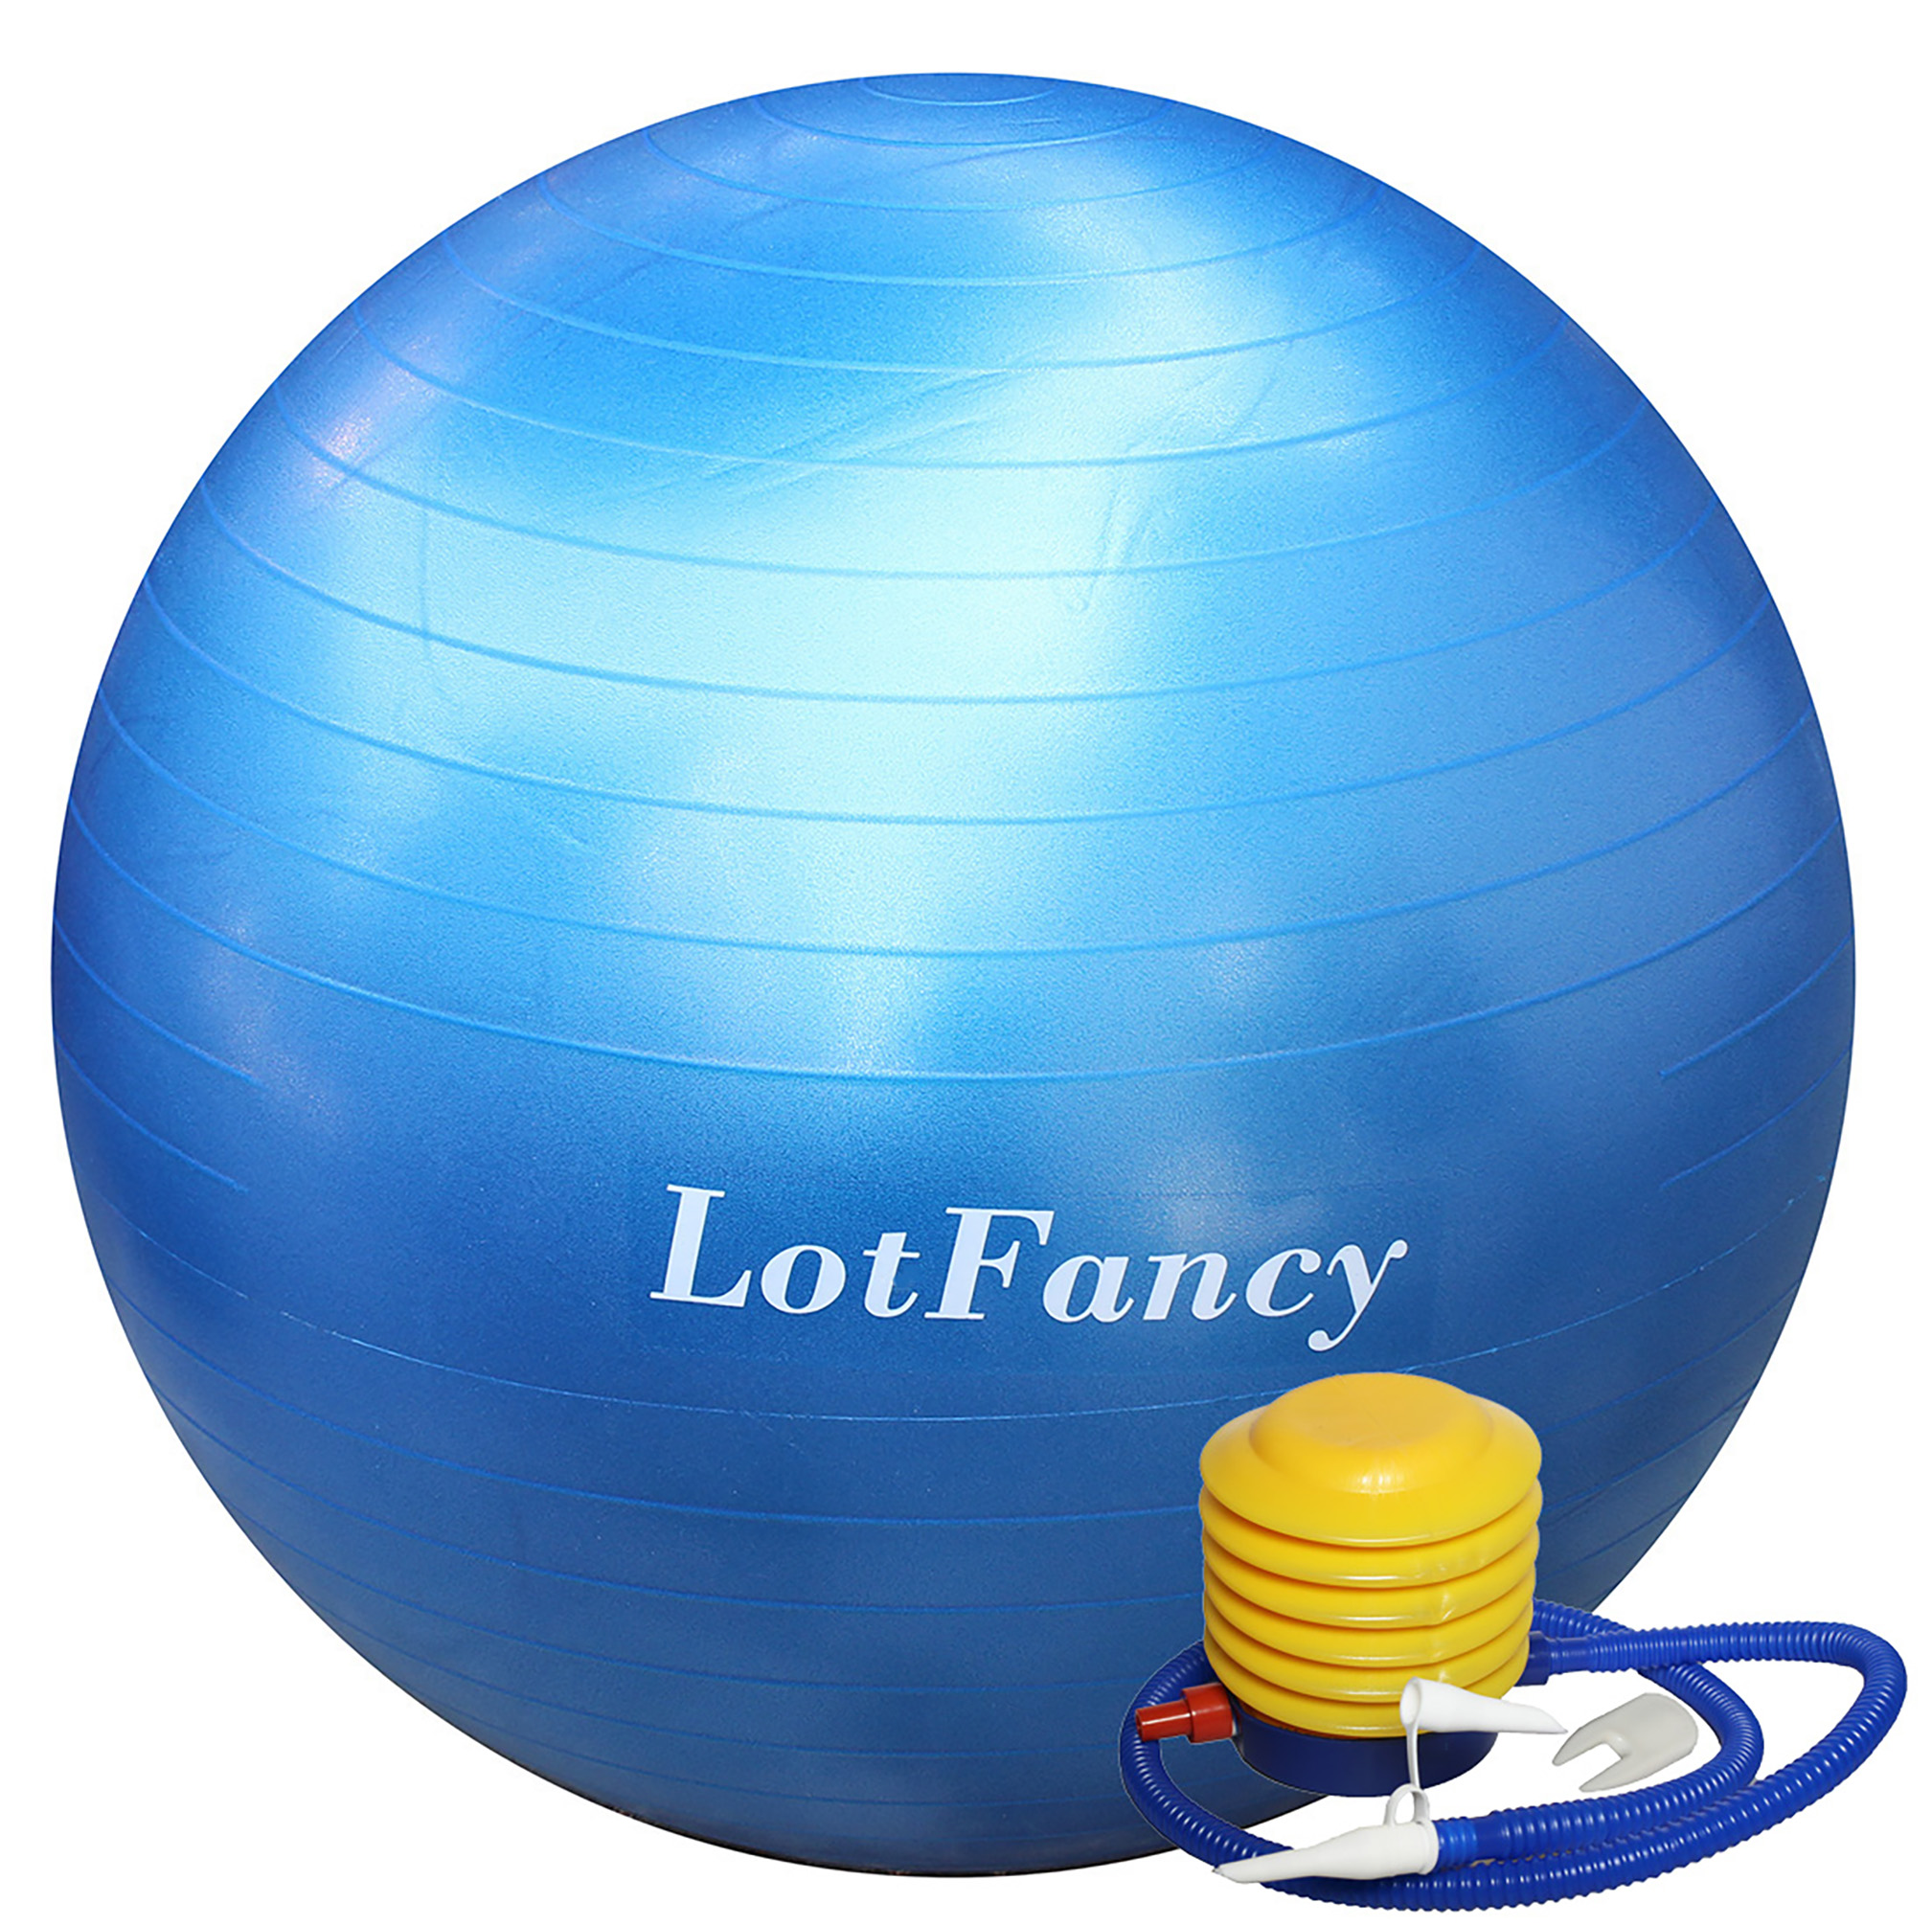 26/" 30/" Yoga Ball Exercise Anti Burst Fitness Balance Workout Stability w//Pump